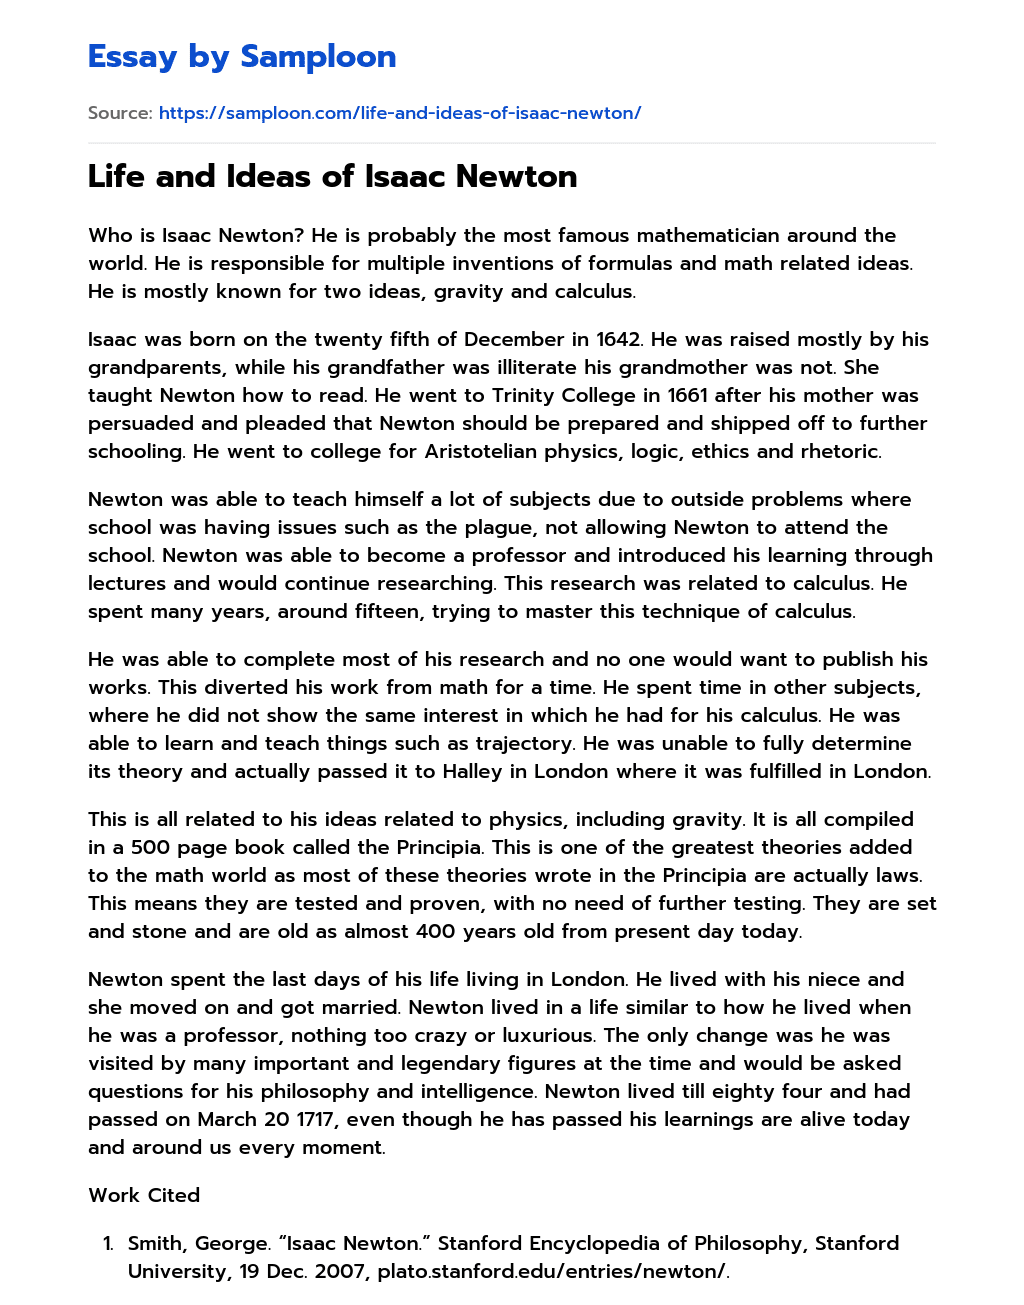 Life and Ideas of Isaac Newton essay